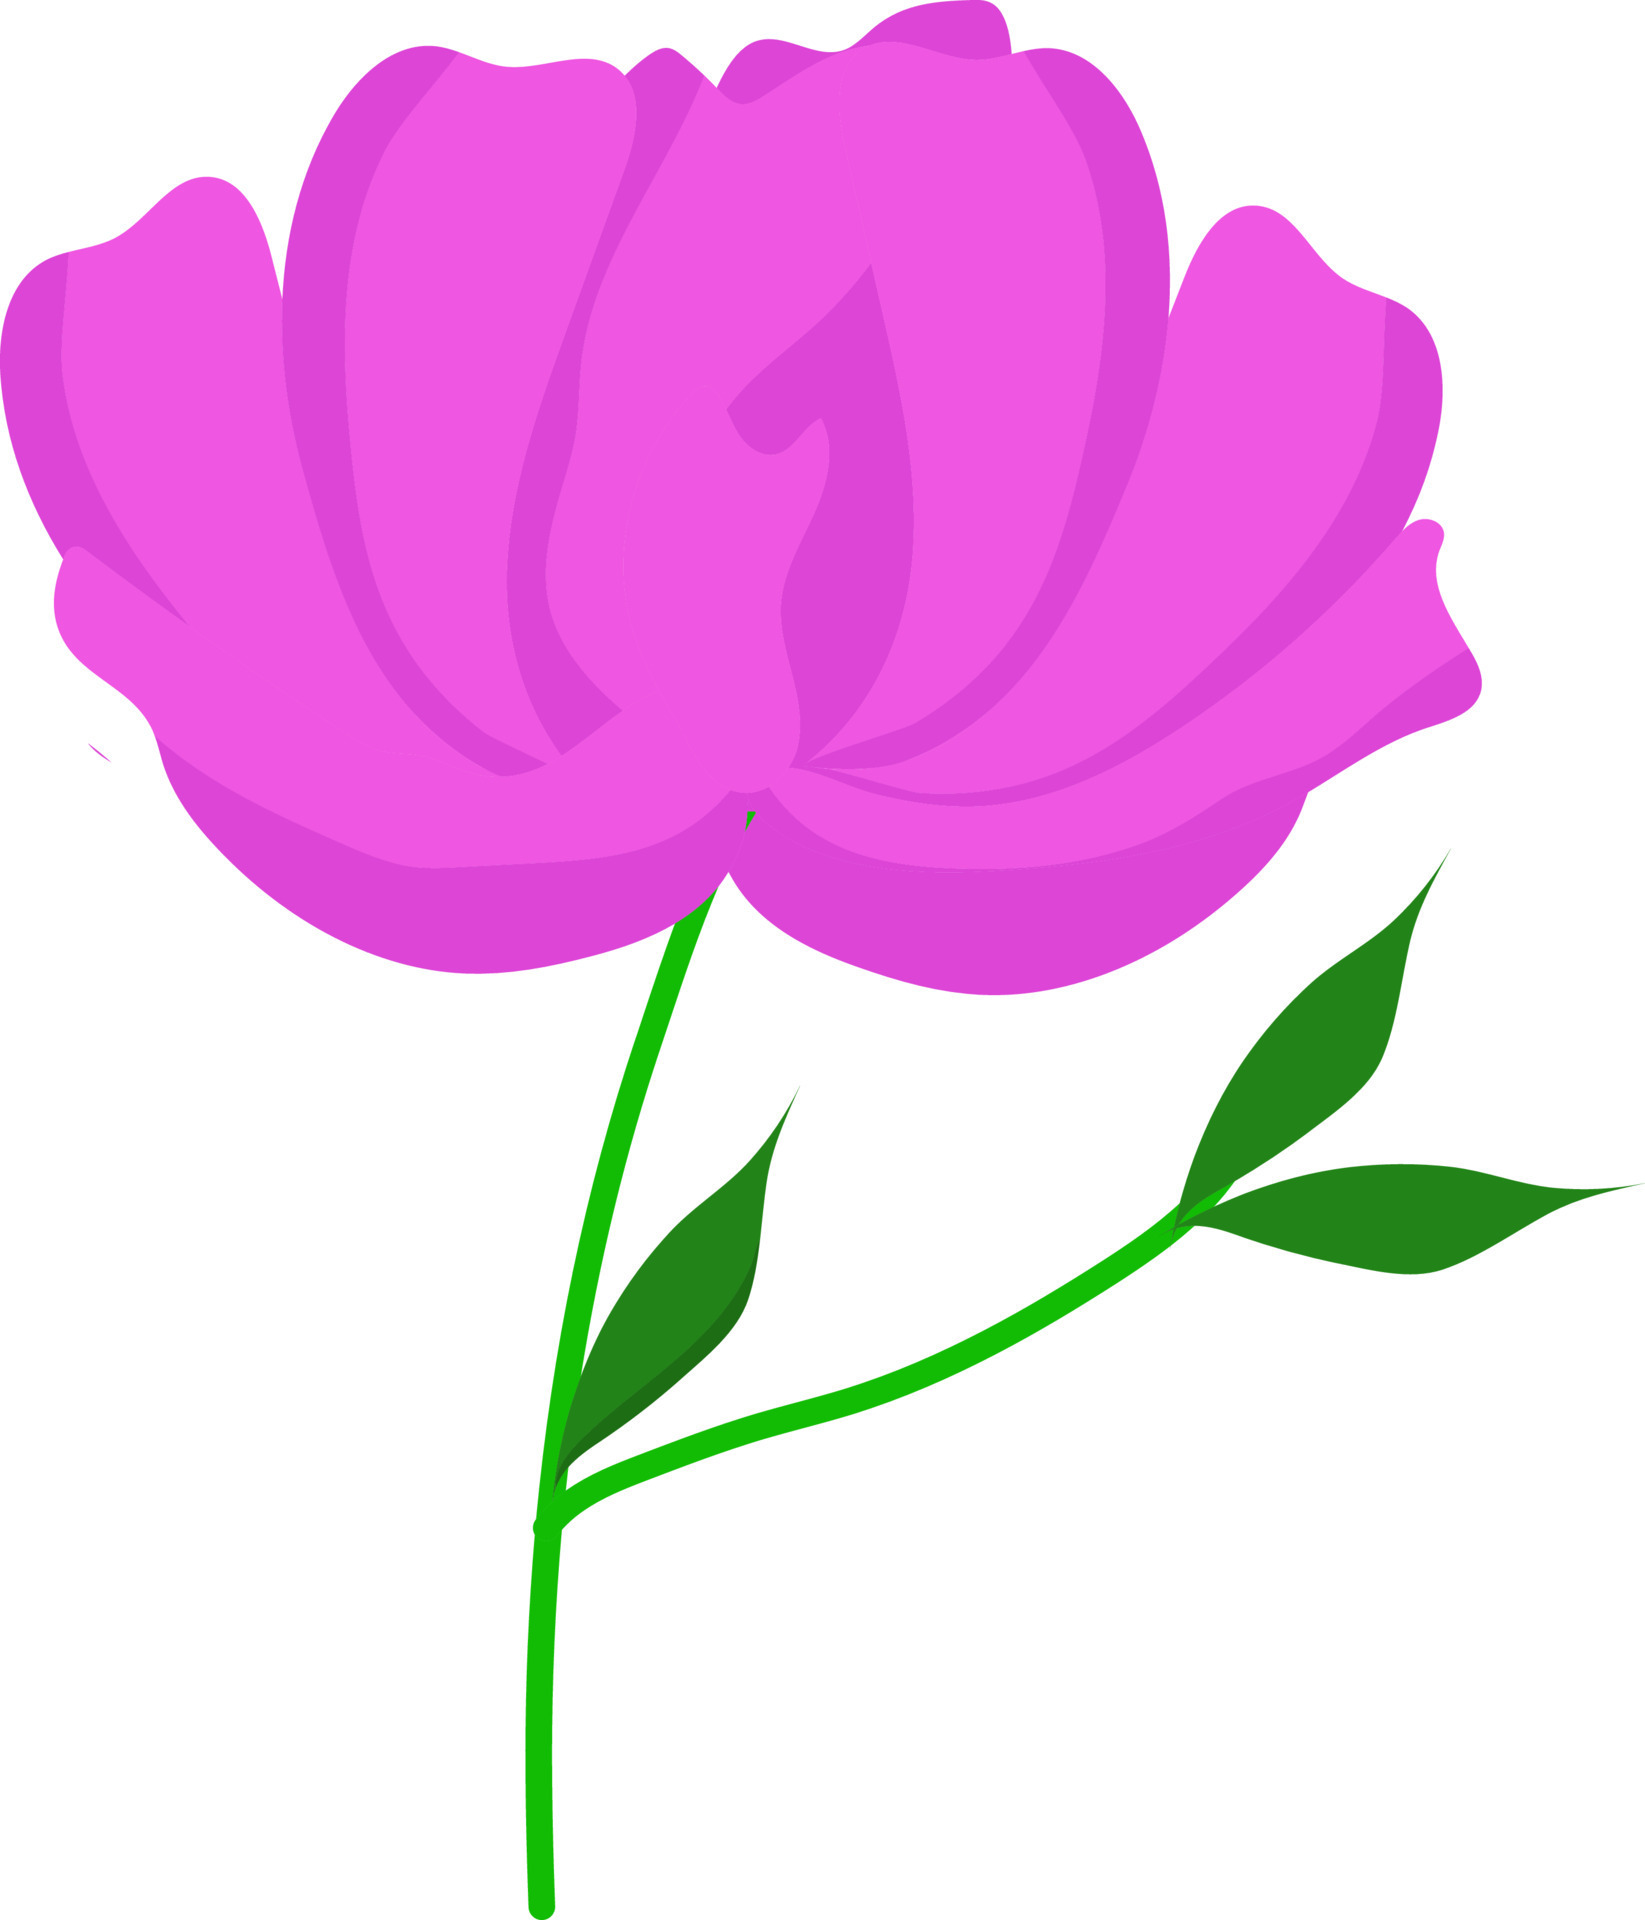 Pink Saqura Flower Stem Icon Or Symbol. 24180052 Vector Art at